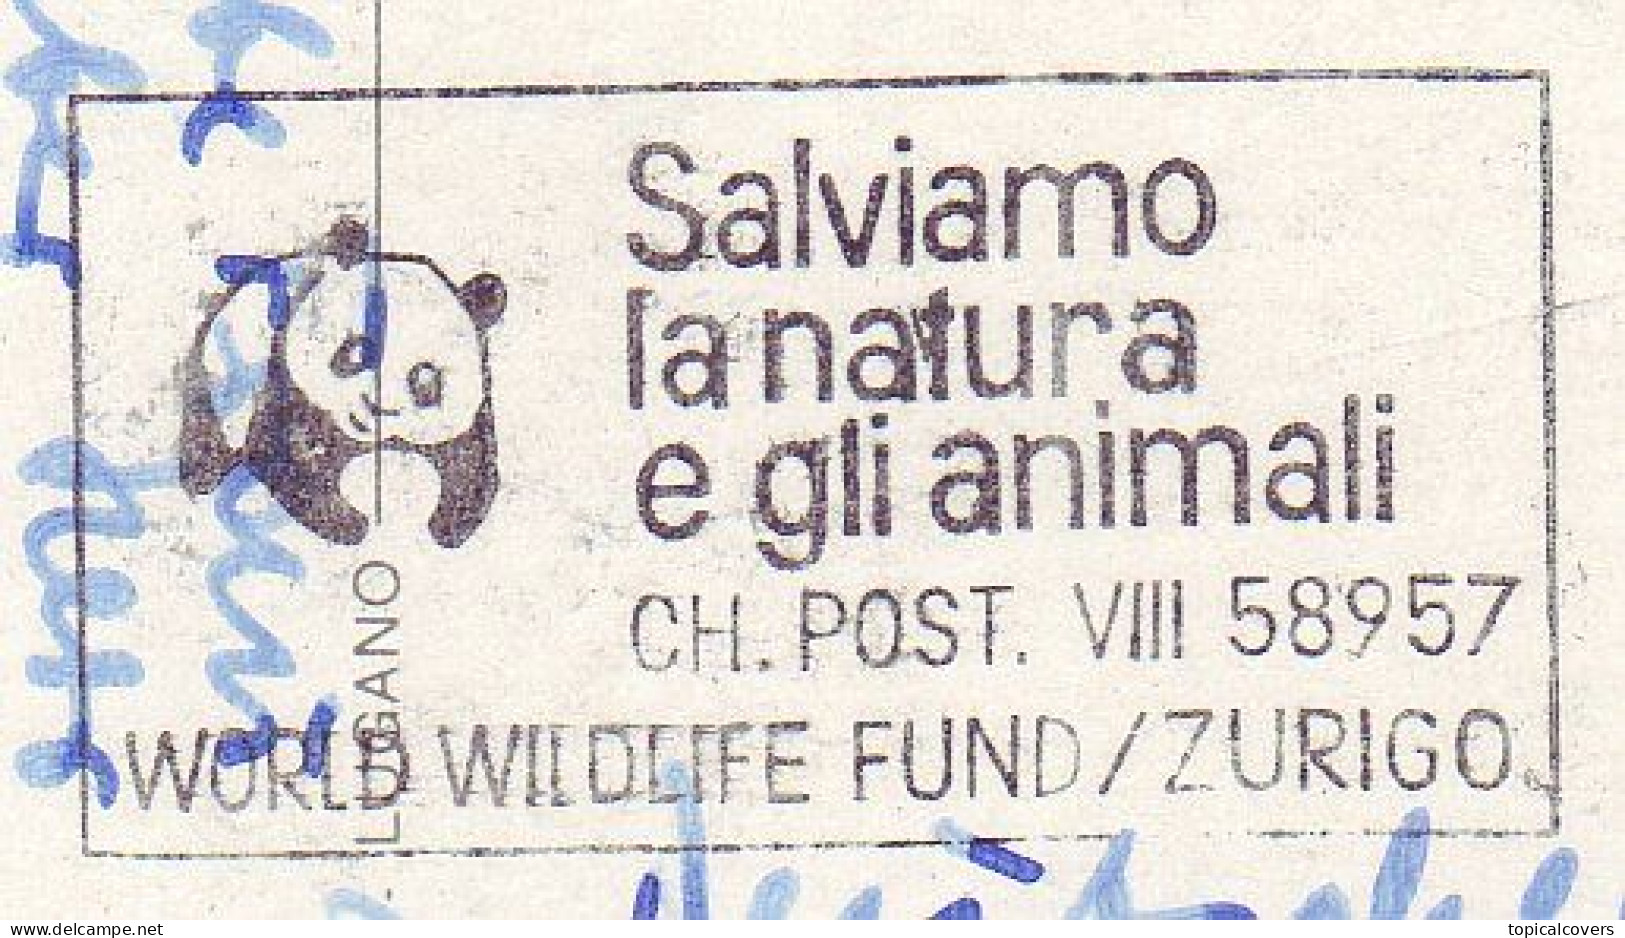 Postcard  / Postmark Switzerland 1964 - WWF - World Wildlife Fund - Panda Bear - Briefe U. Dokumente